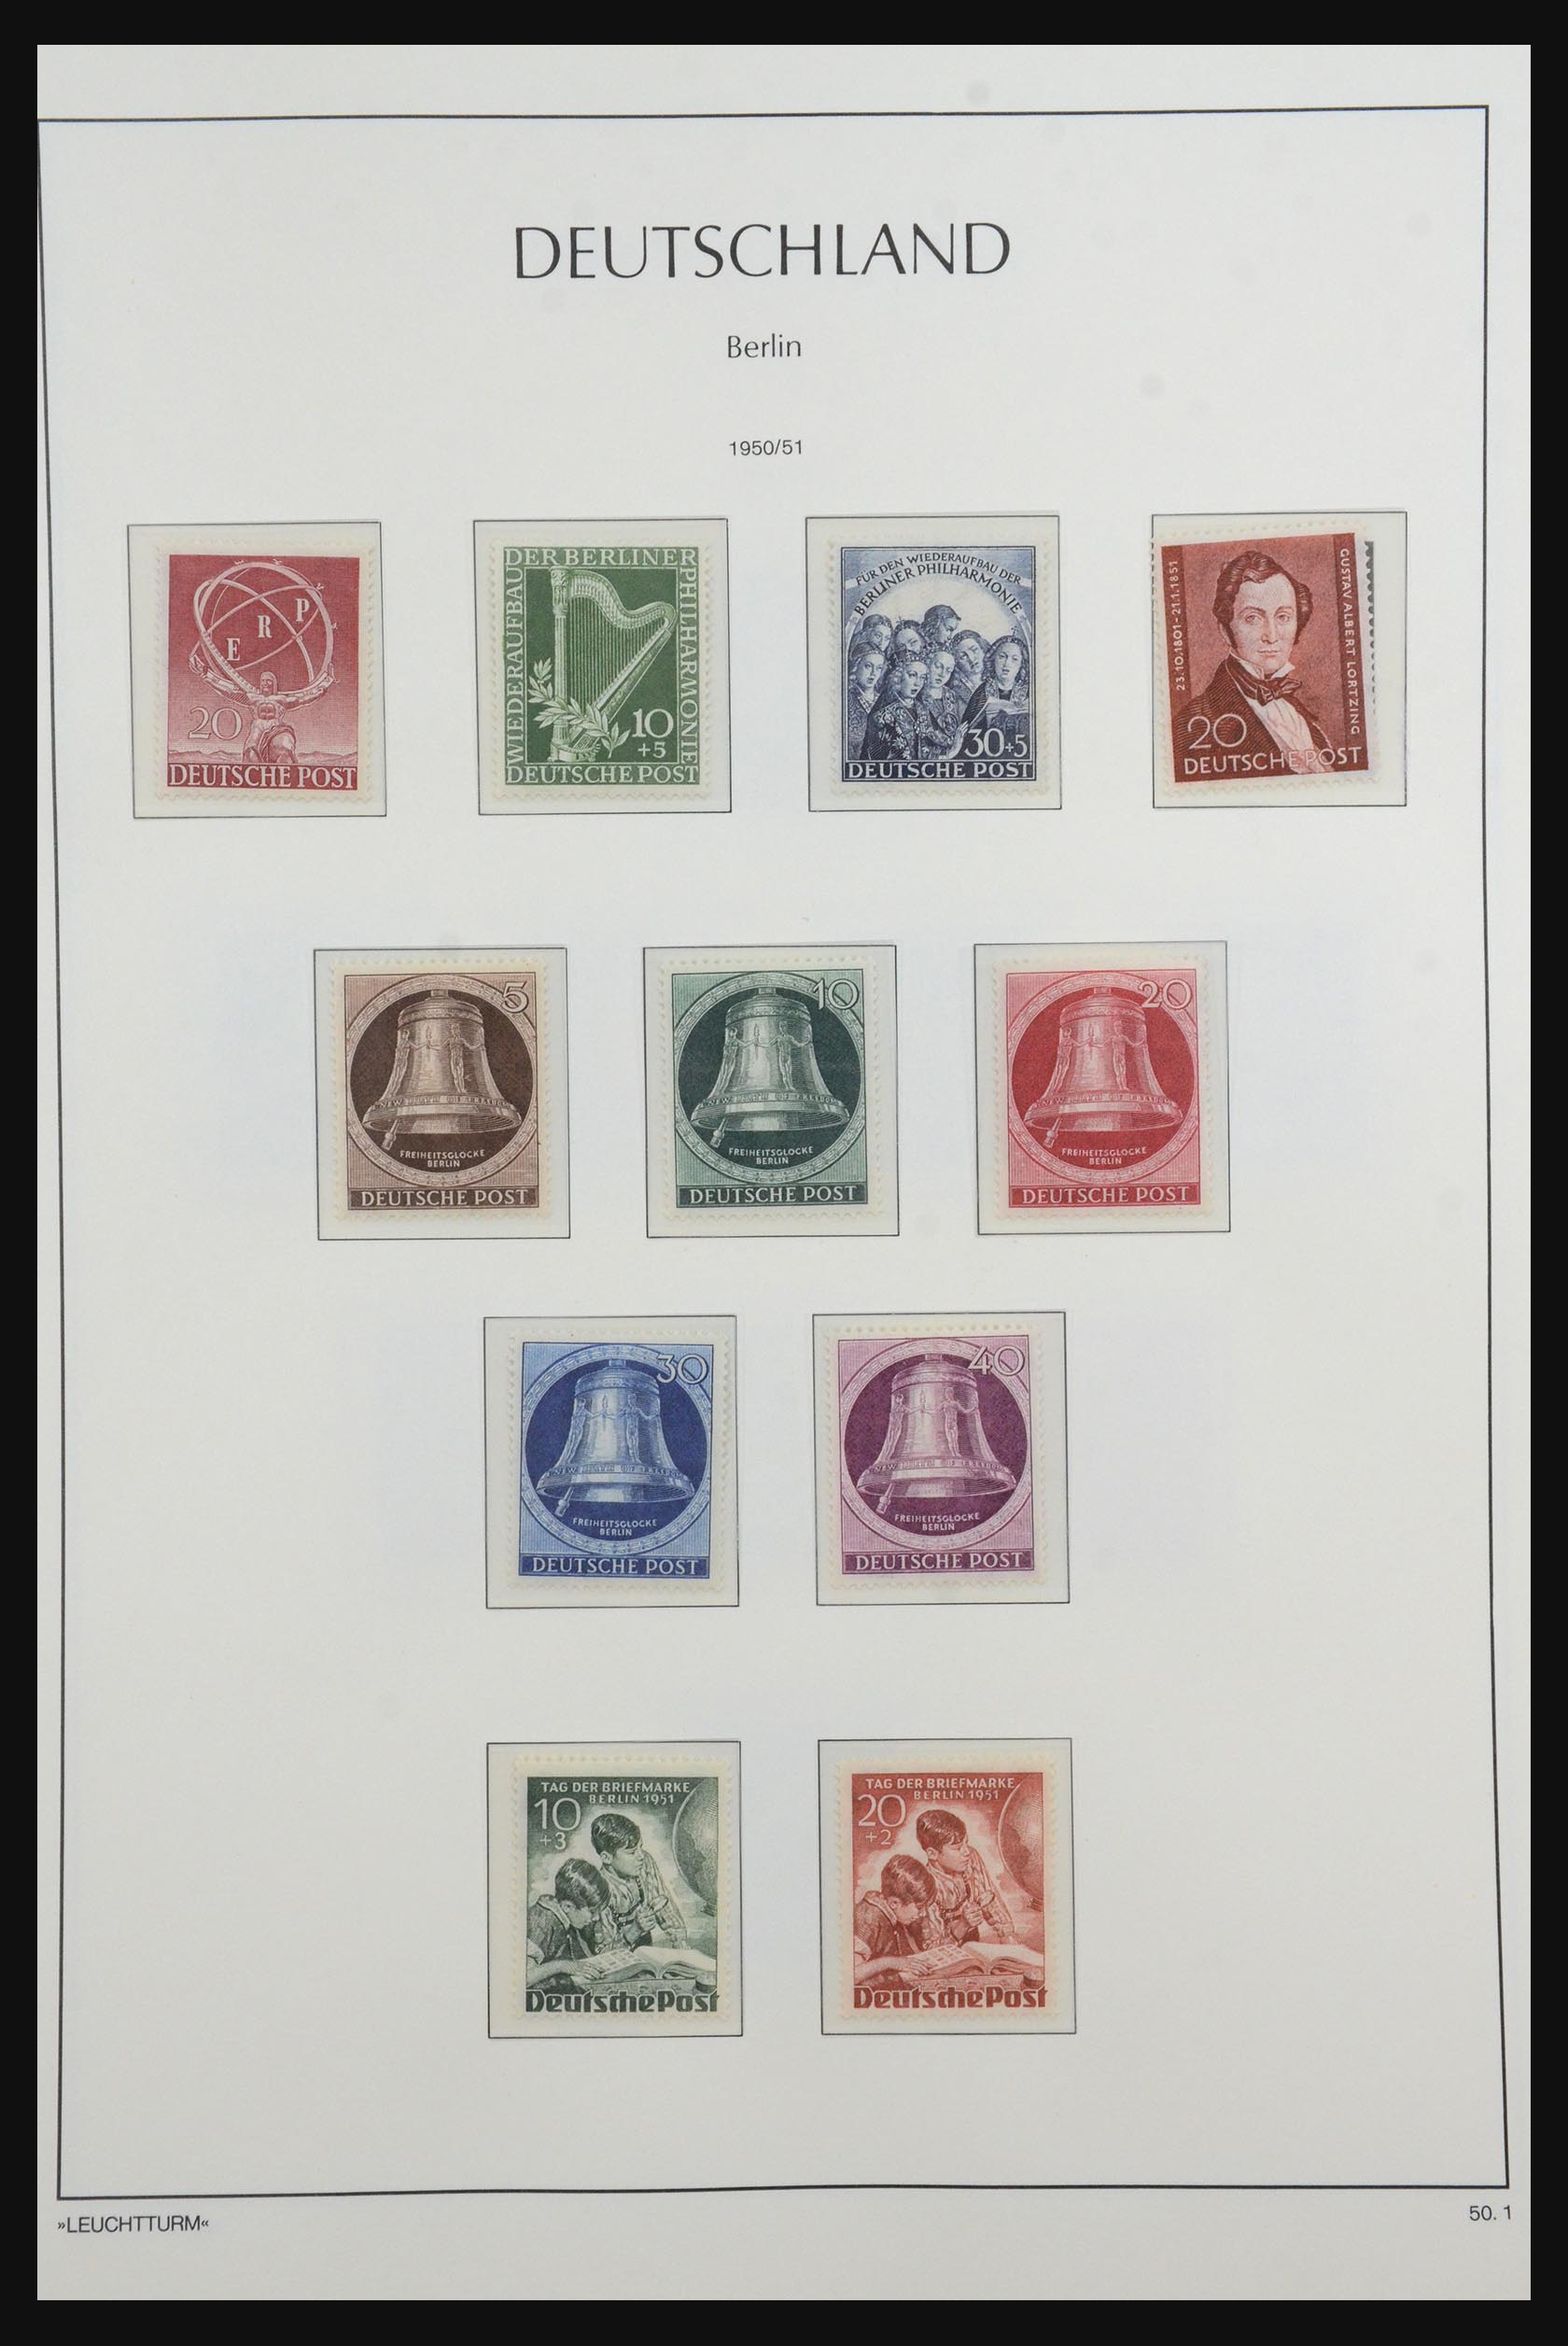 31601 006 - 31601 Bundespost, Berlin and Saar 1948-2008.